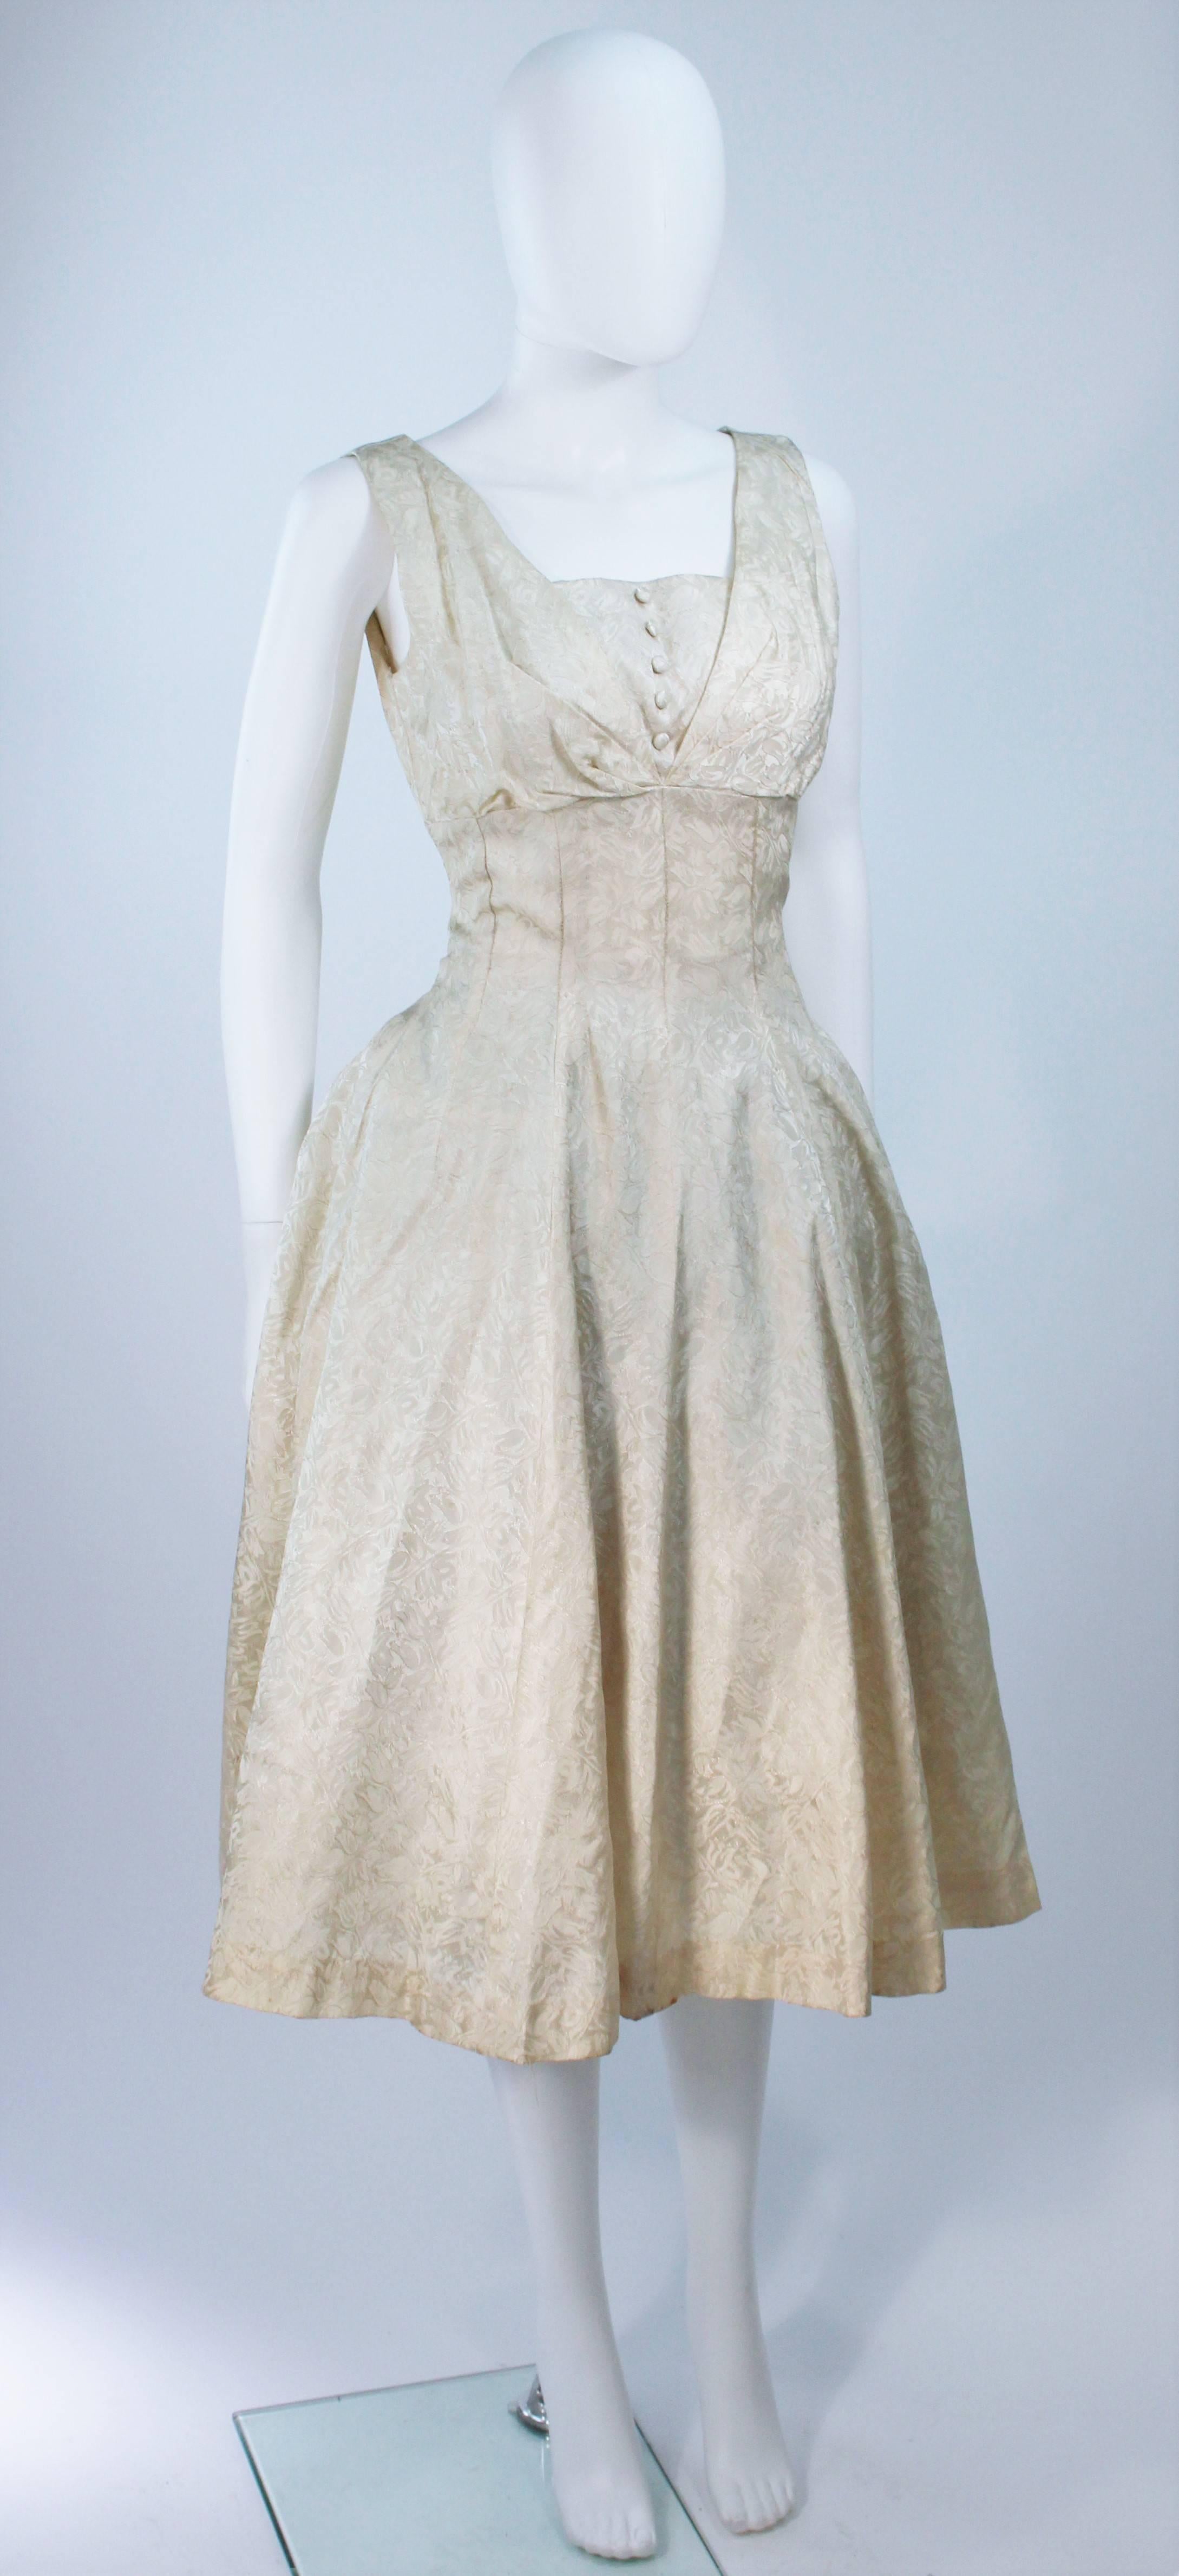 Women's 1960's Cream Brocade Cocktail Dress Size 4-6